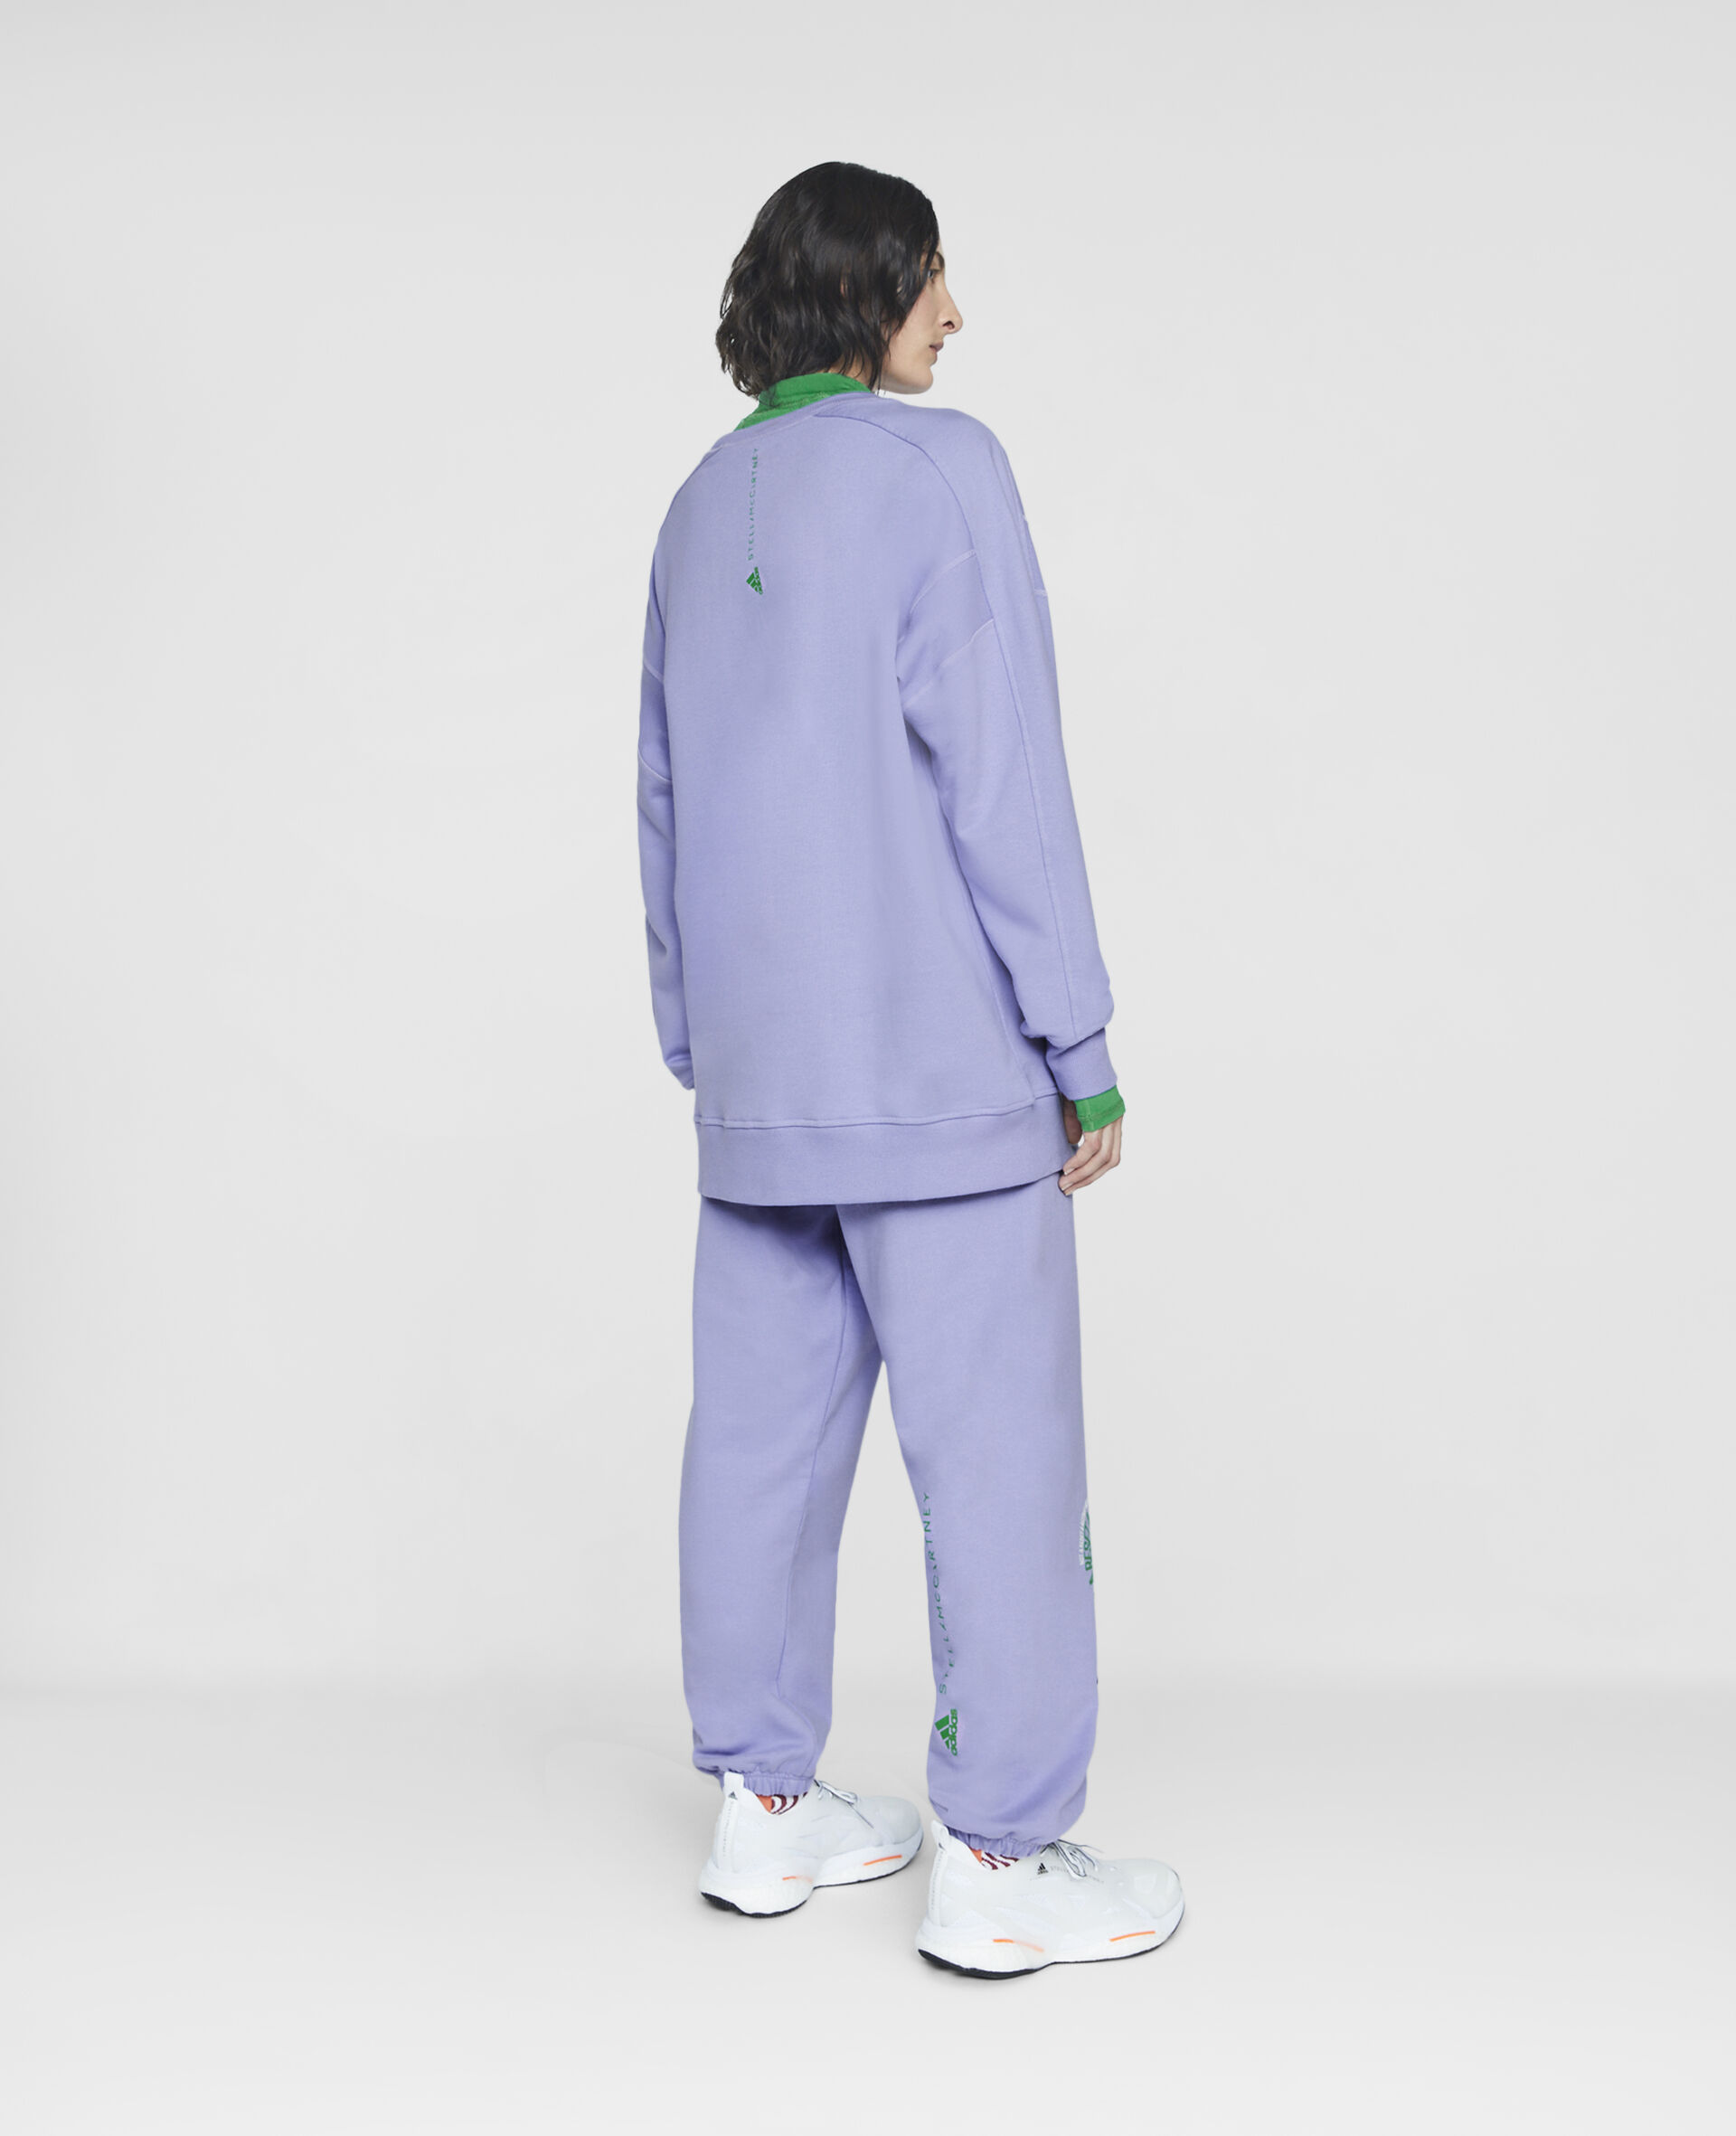 Unisex Sportswear Joggers-Purple-large image number 2